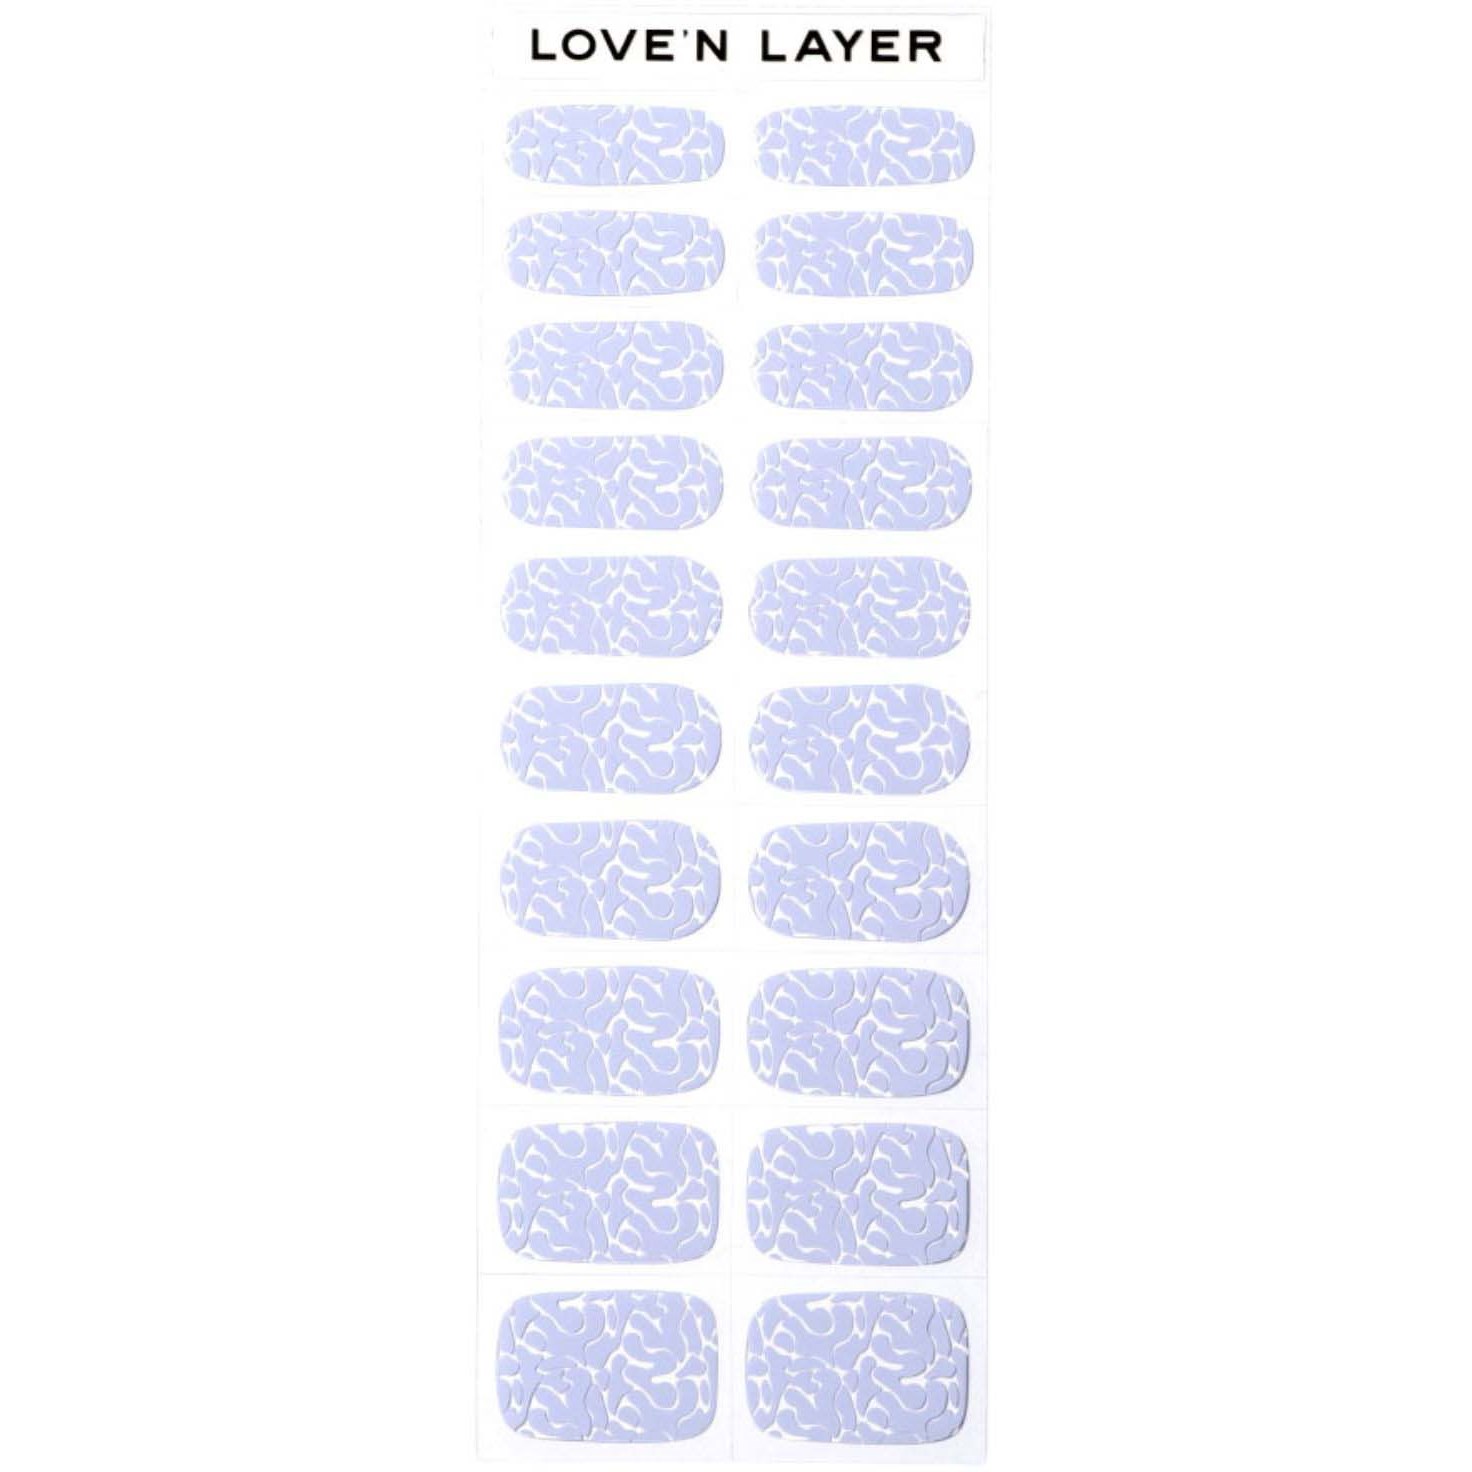 Loven Layer LNL Sky Blue